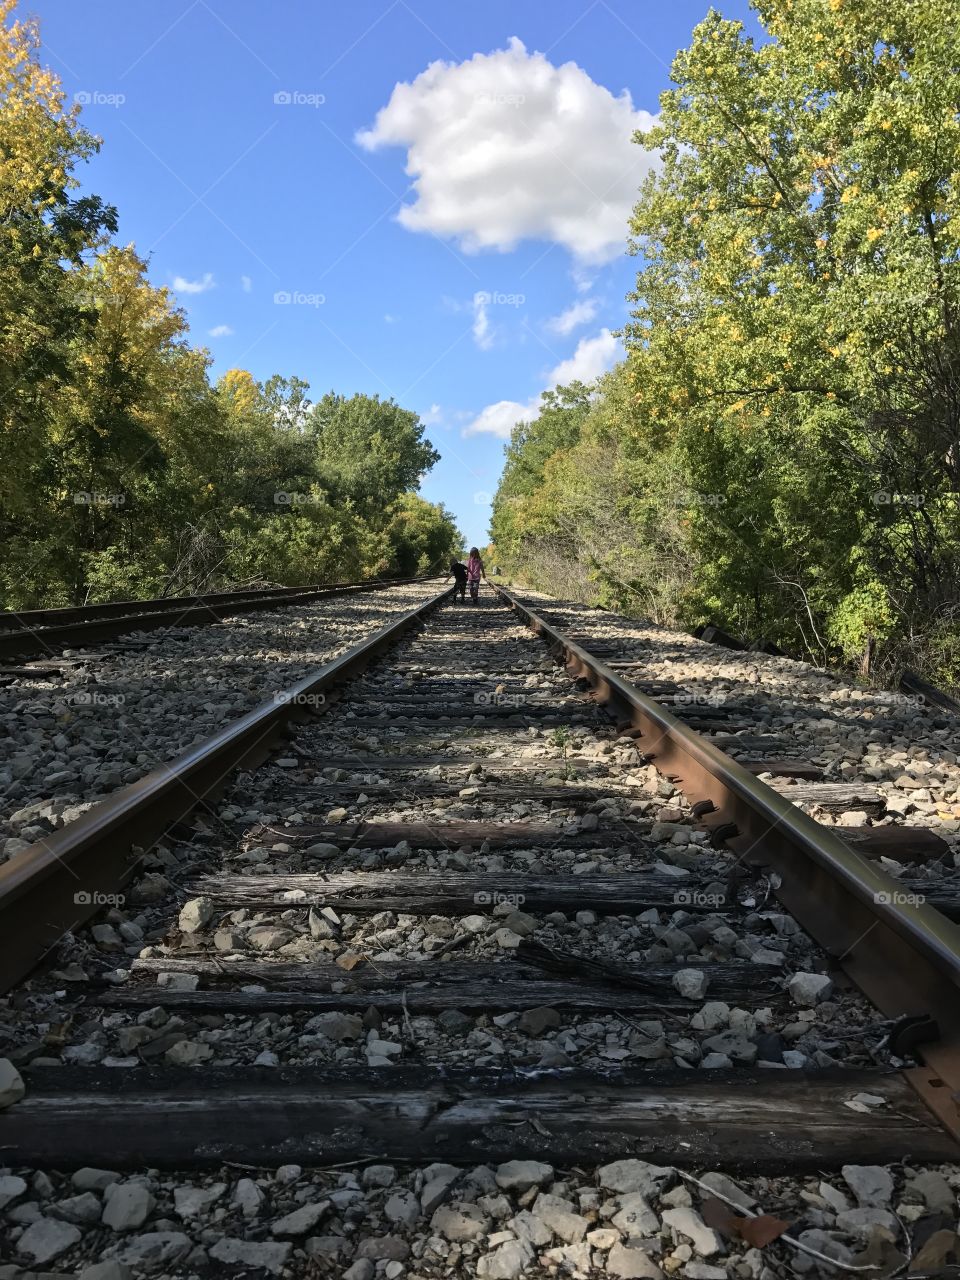 Walking on the railroad tracks 